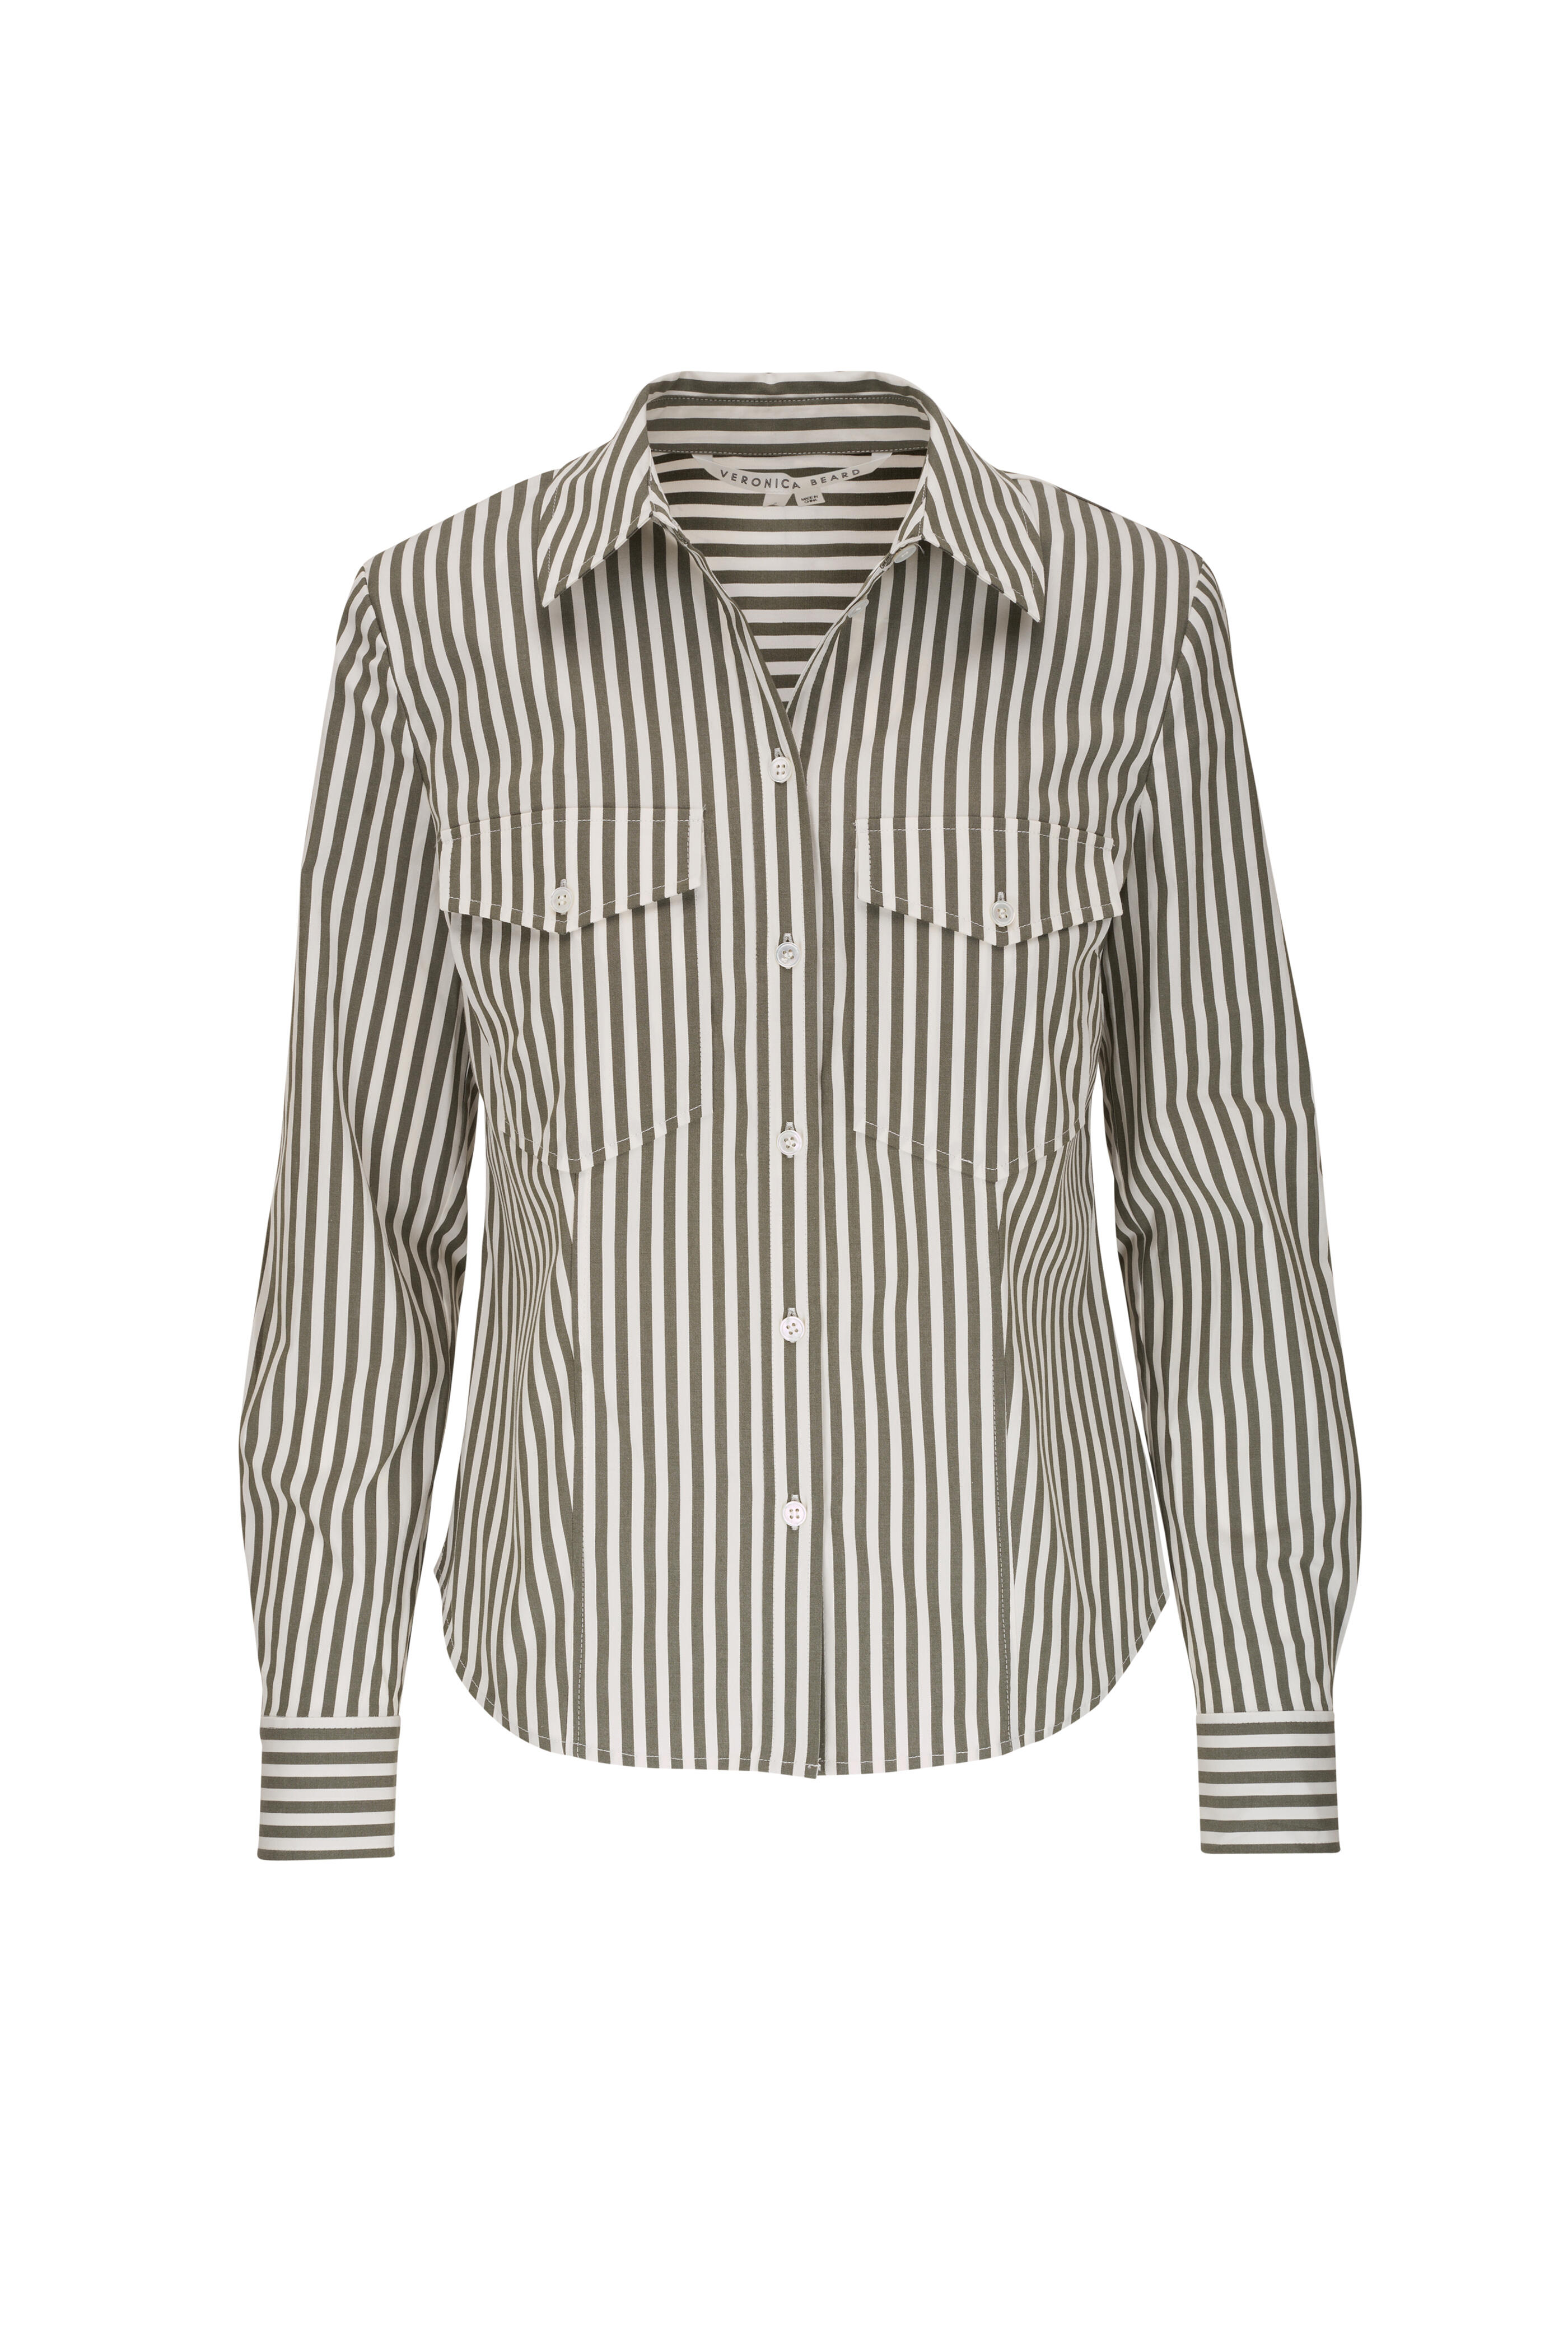 Veronica Beard - Barnette Bright Army & White Striped Shirt